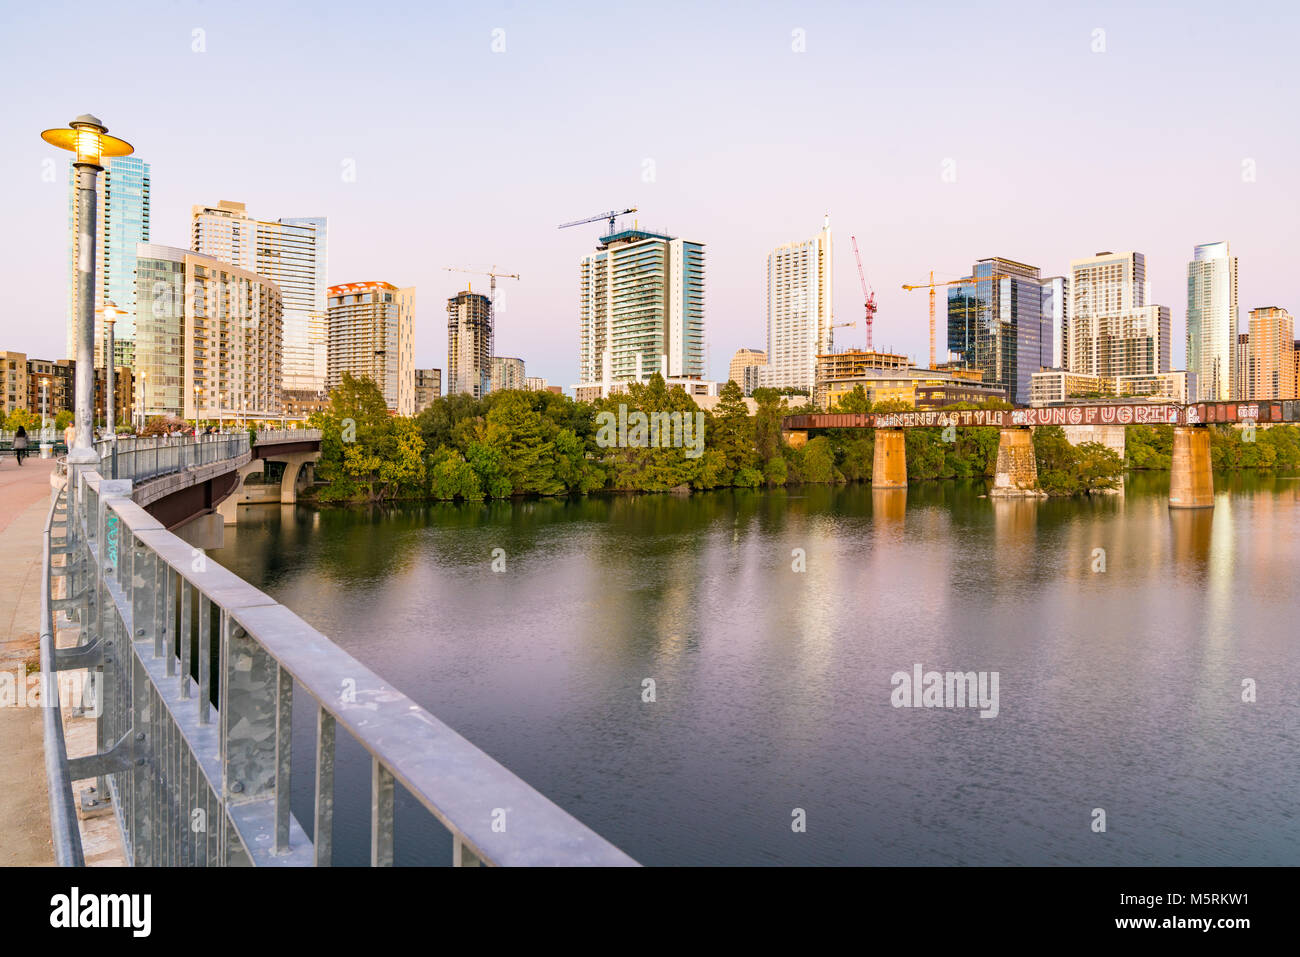 AUSTIN, TX - OCTOBER 28, 2017: Skyline of Austin, Texas from the Pfluger Pedestrian Bridge Stock Photo